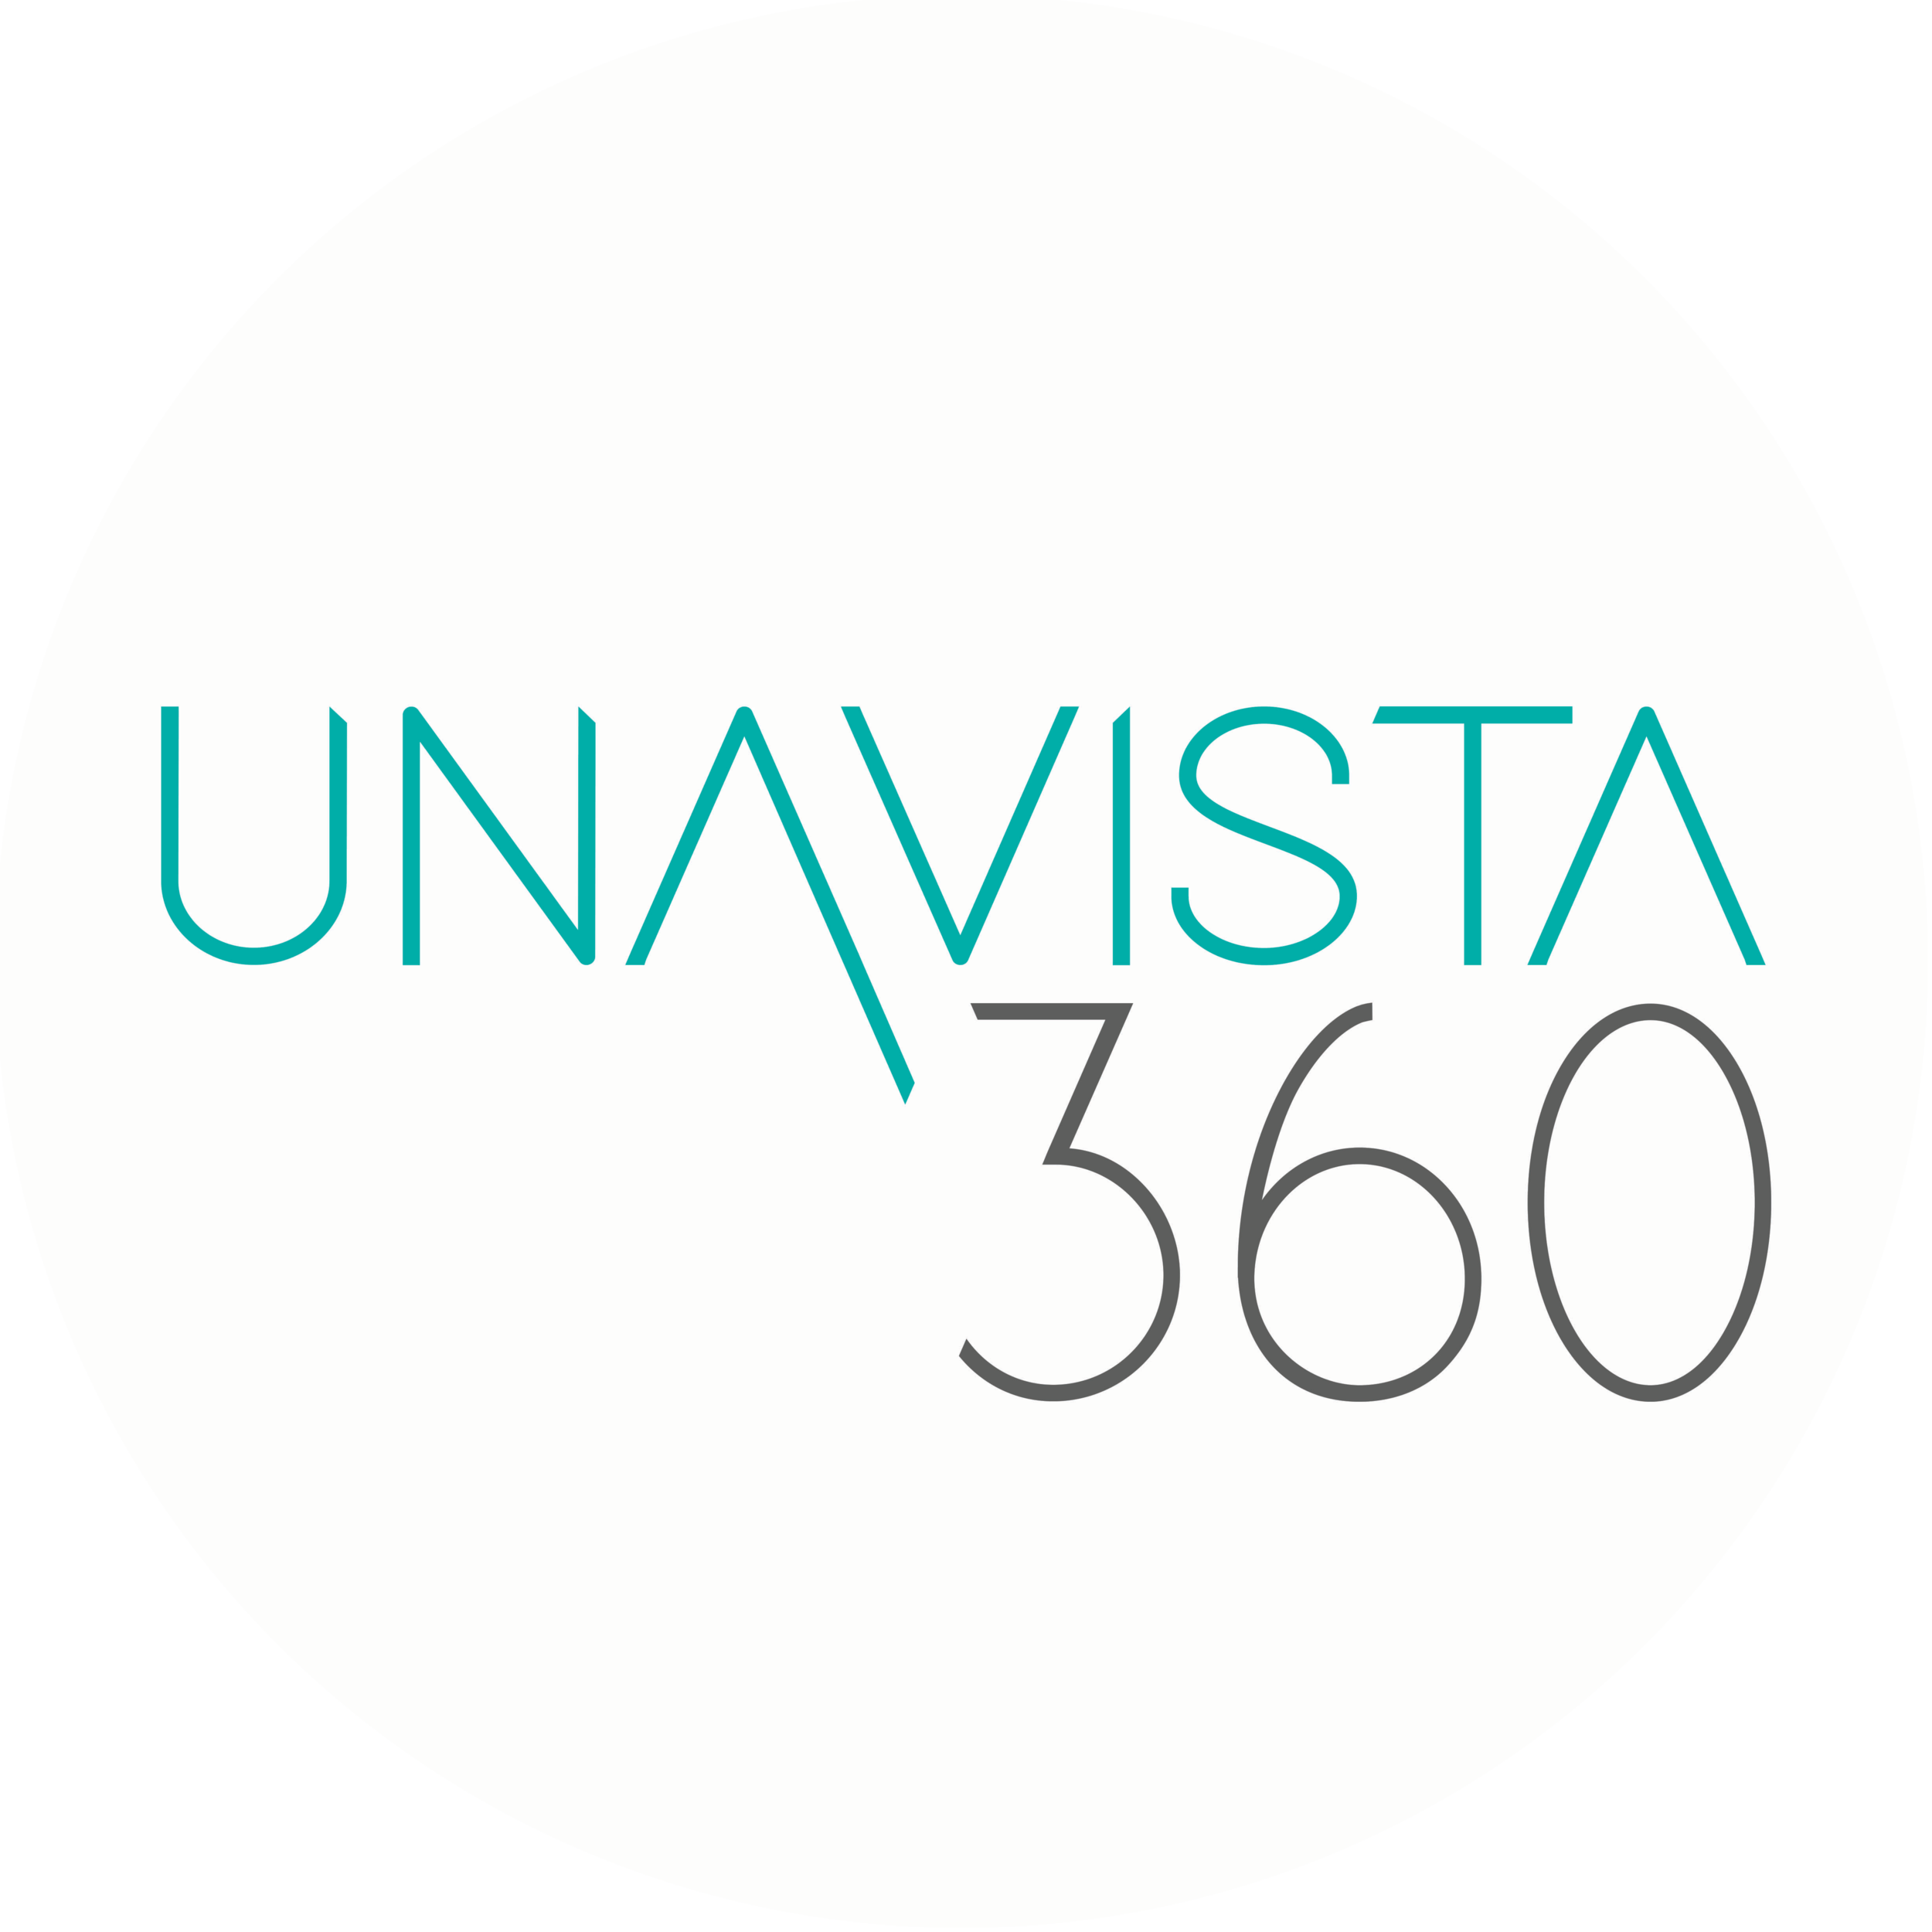 UNAVISTA 360